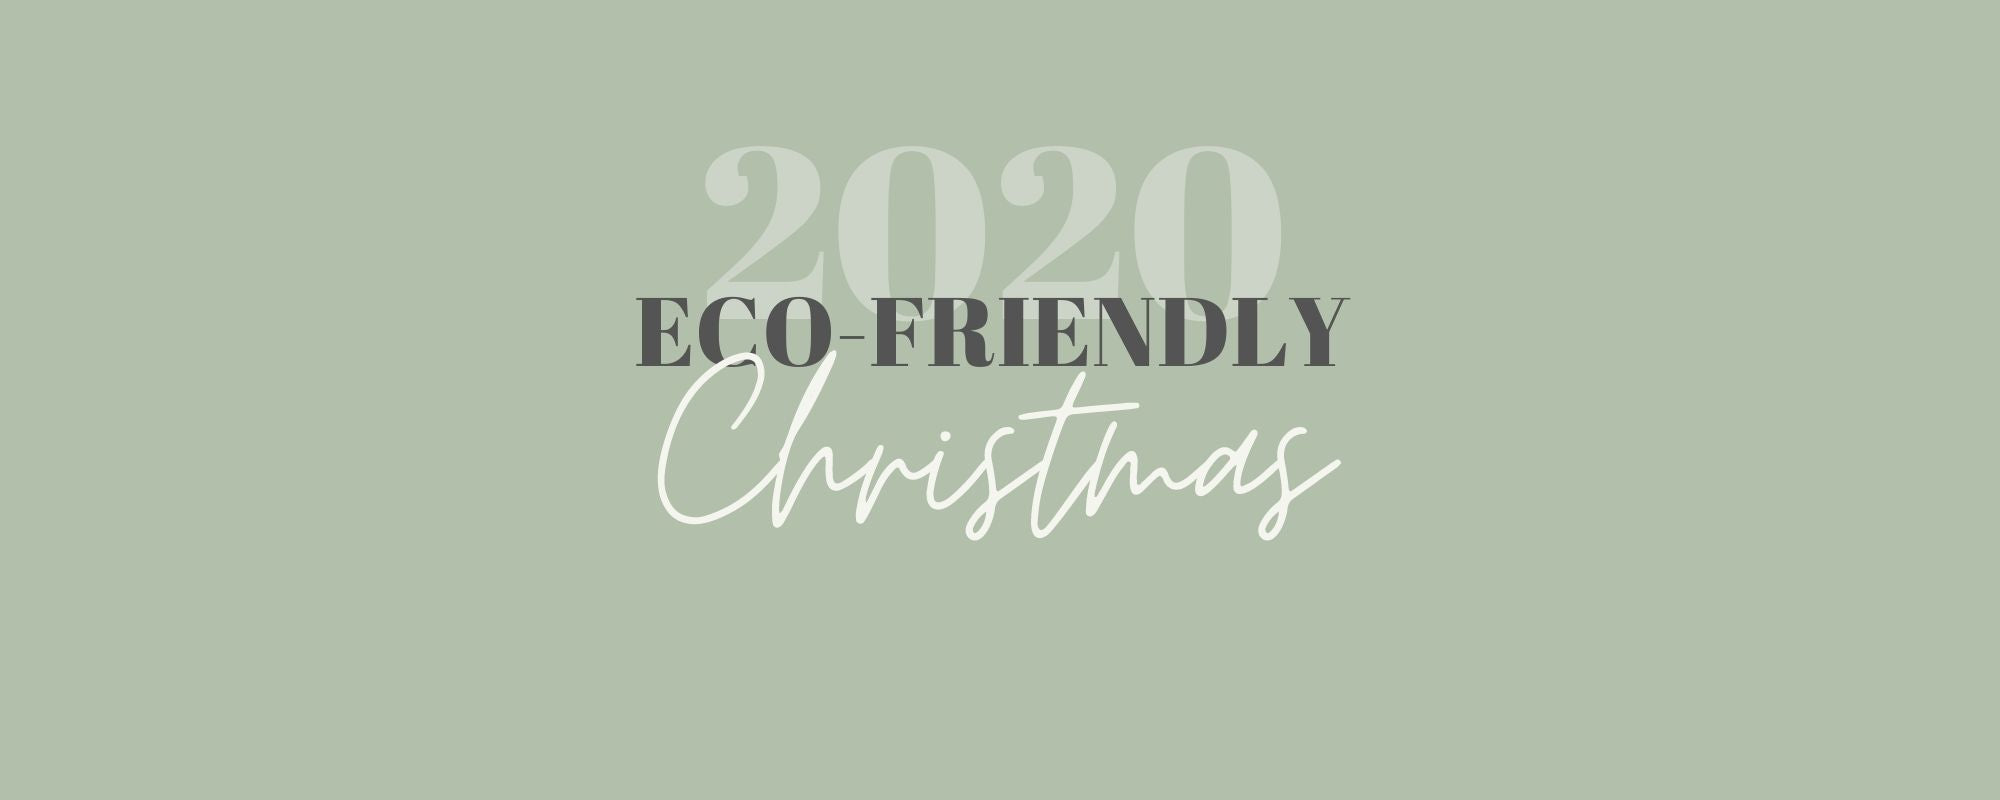 2020 ECO-FRIENDLY CHRISTMAS GUIDE